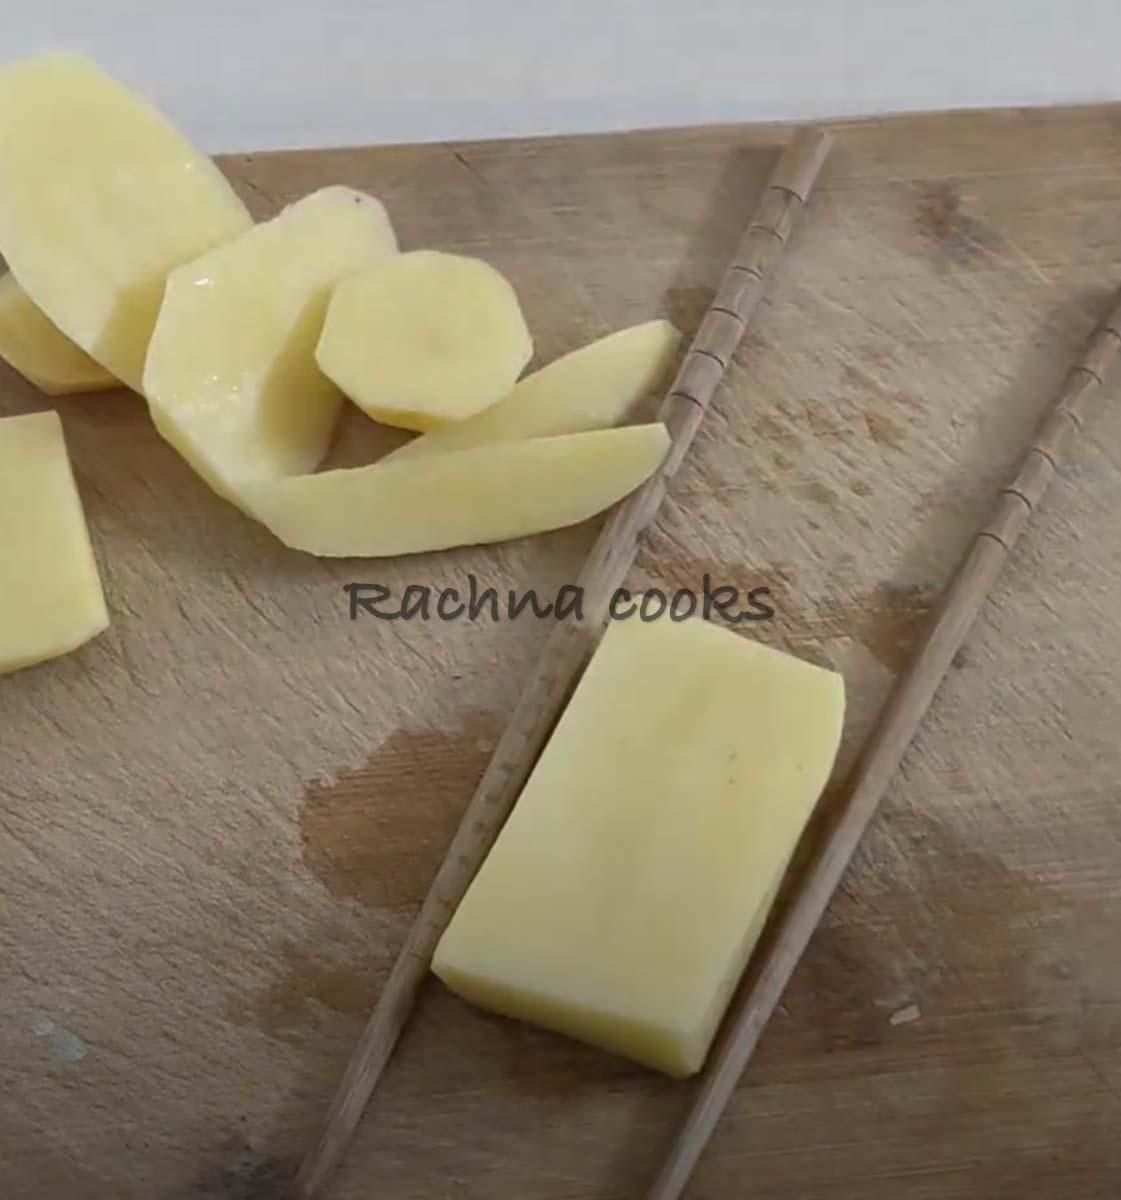 Potato slice kept between chopsticks.